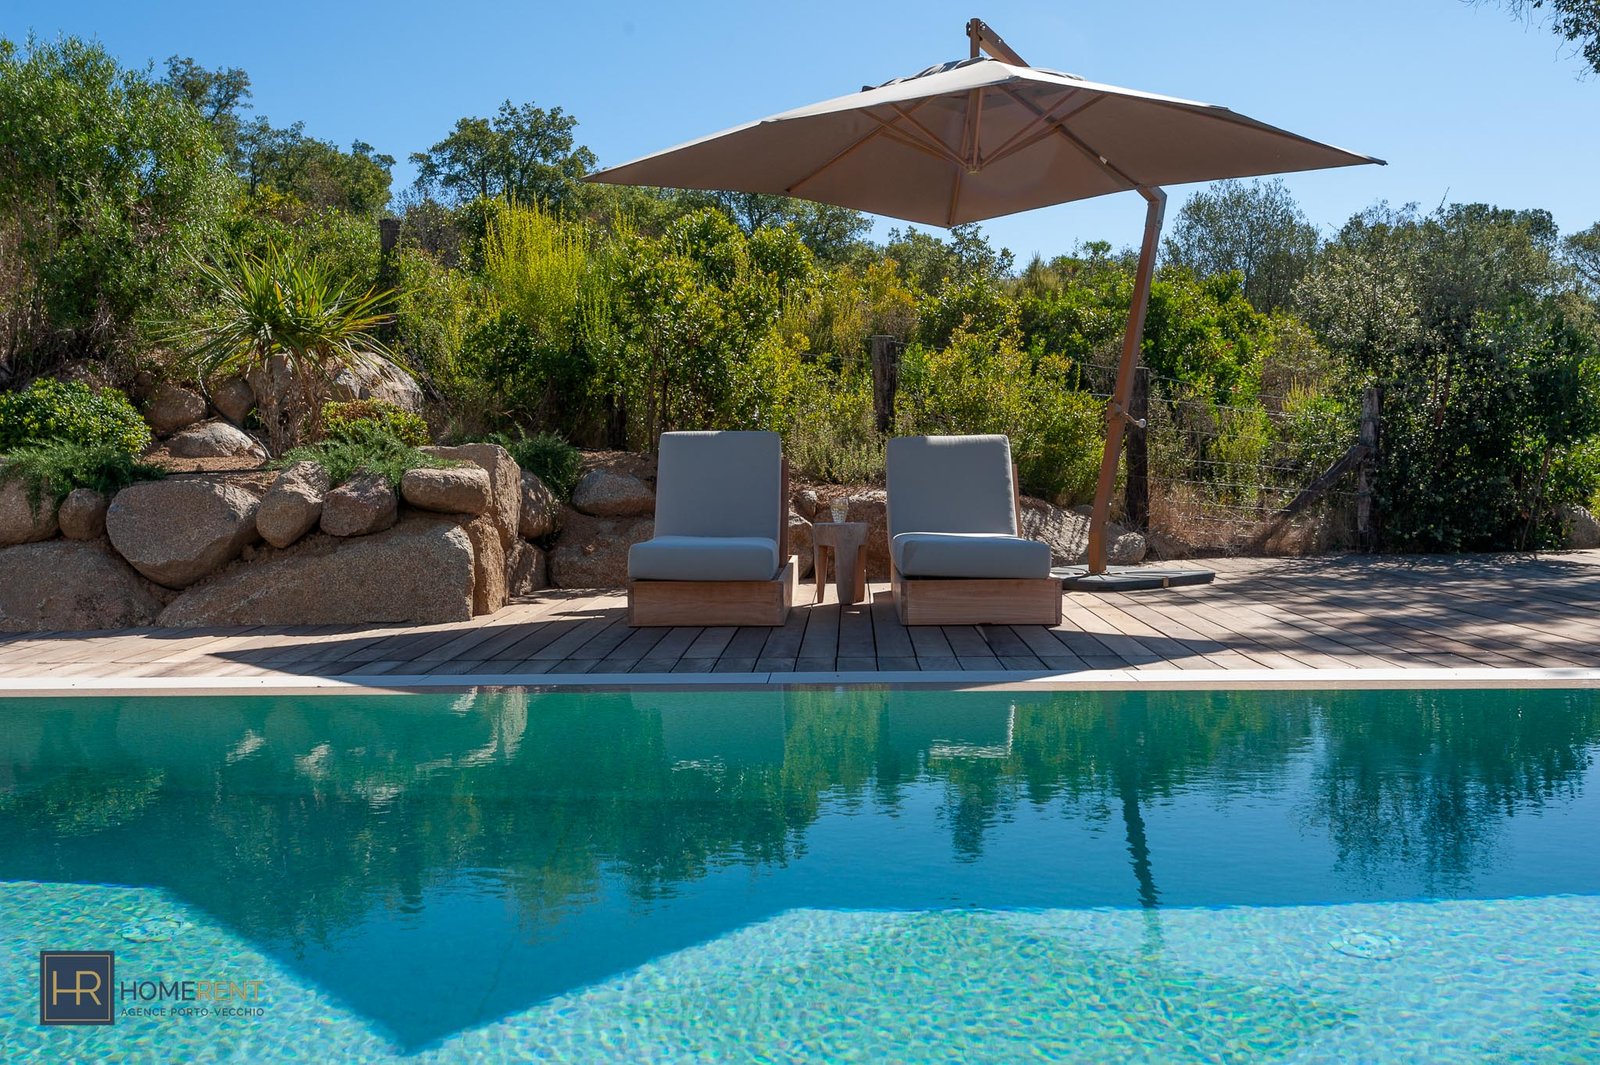 Location villa luxe moderne Porto Vecchio Corse du Sud proche plage Cabanon bleu St Cyprien piscine 5 chambres jardin climatisée